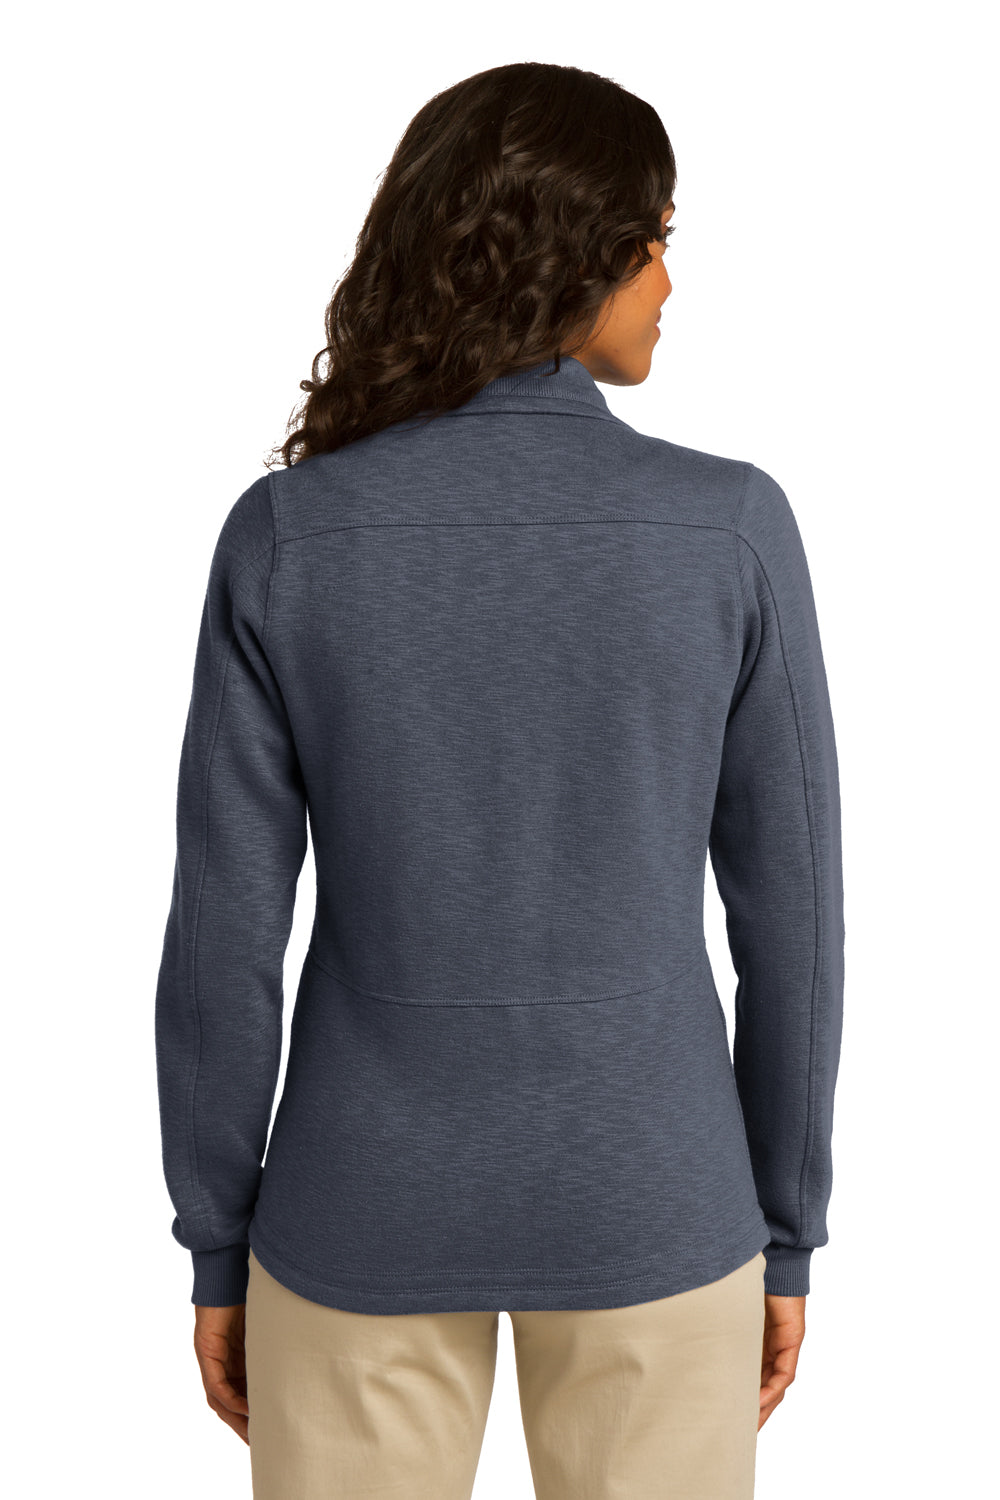 Port Authority L293 Womens Full Zip Fleece Jacket Slate Grey Back